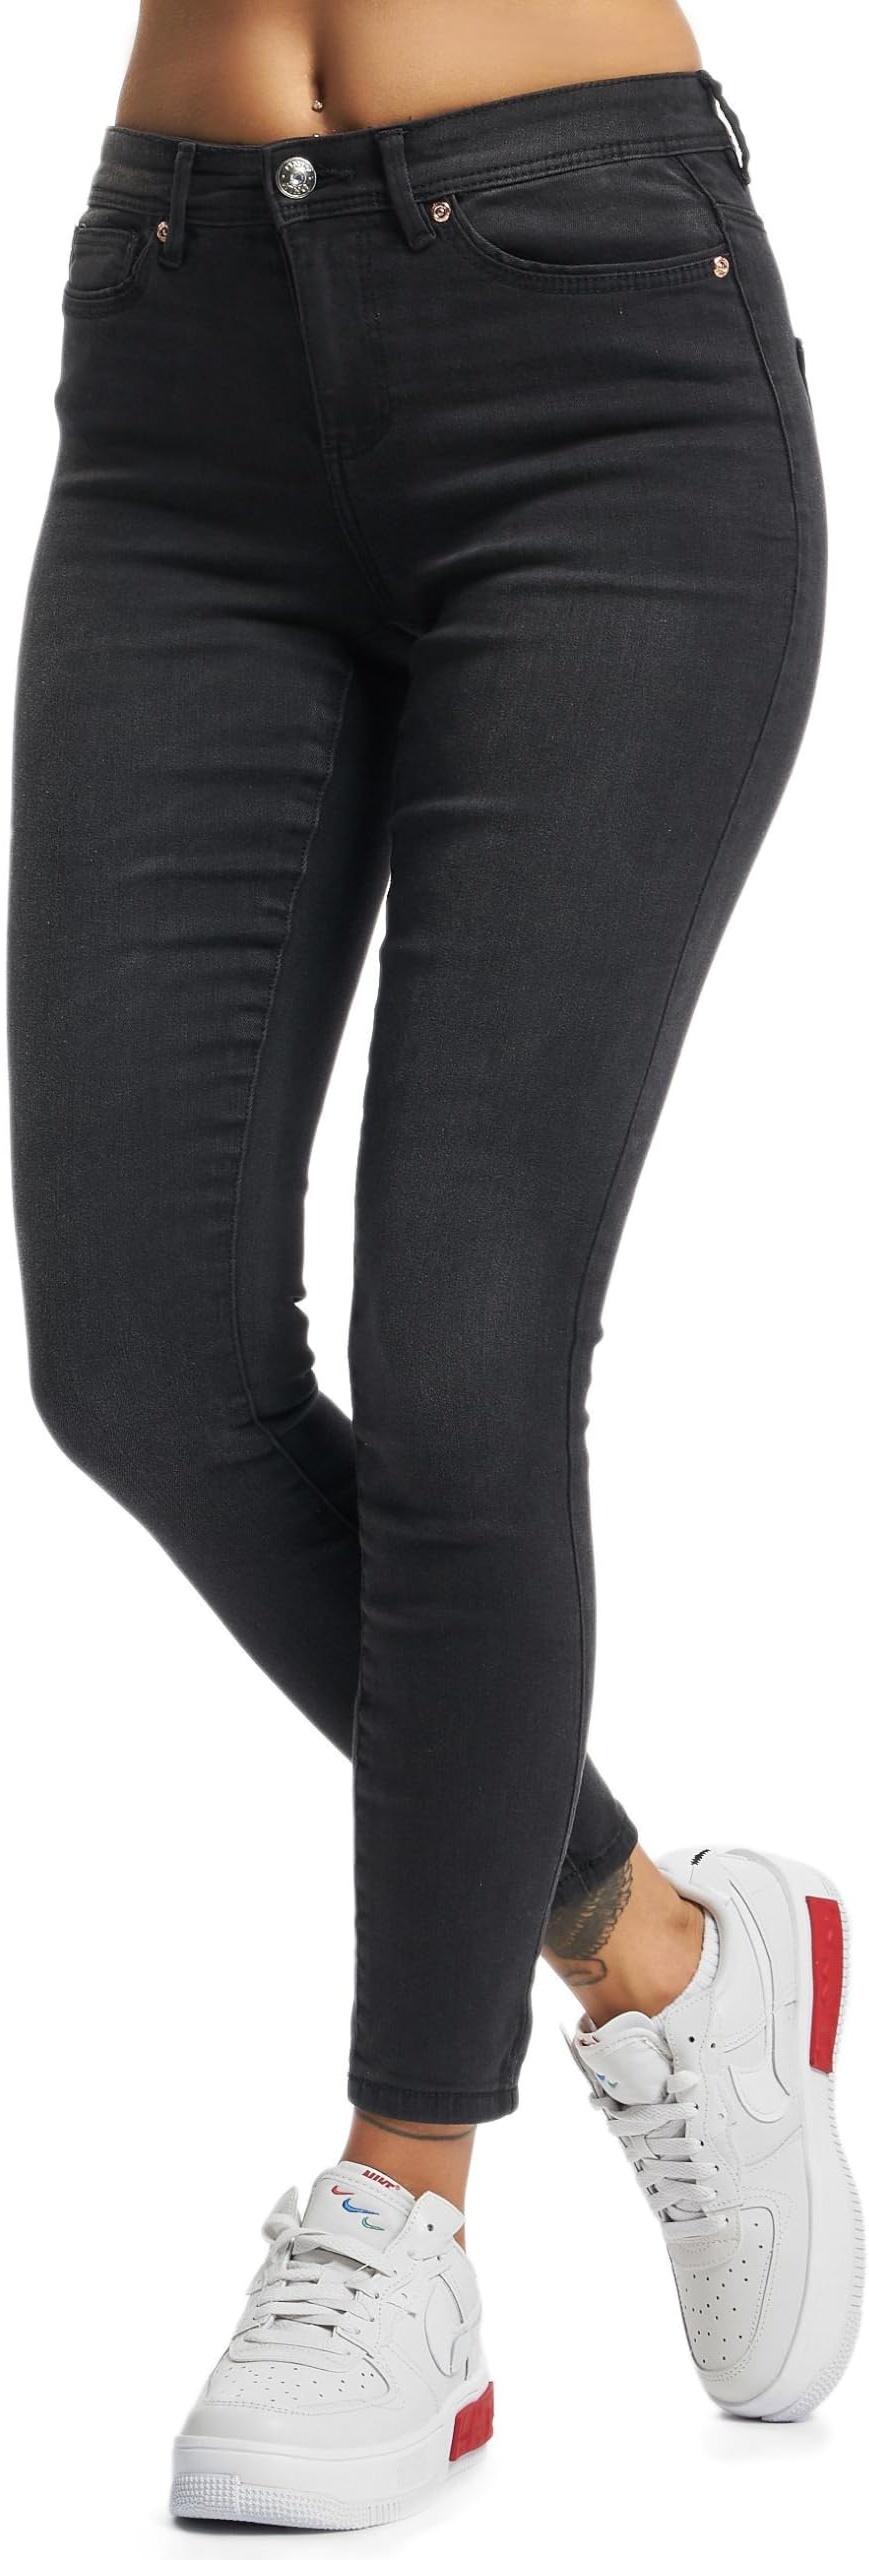 ONLY Damen Skinny Fit Jeans | Normal Waist Denim Stretch Hose | Bleached Used Design ONLWAUW, Farben:Schwarz, Größe:M / 30L